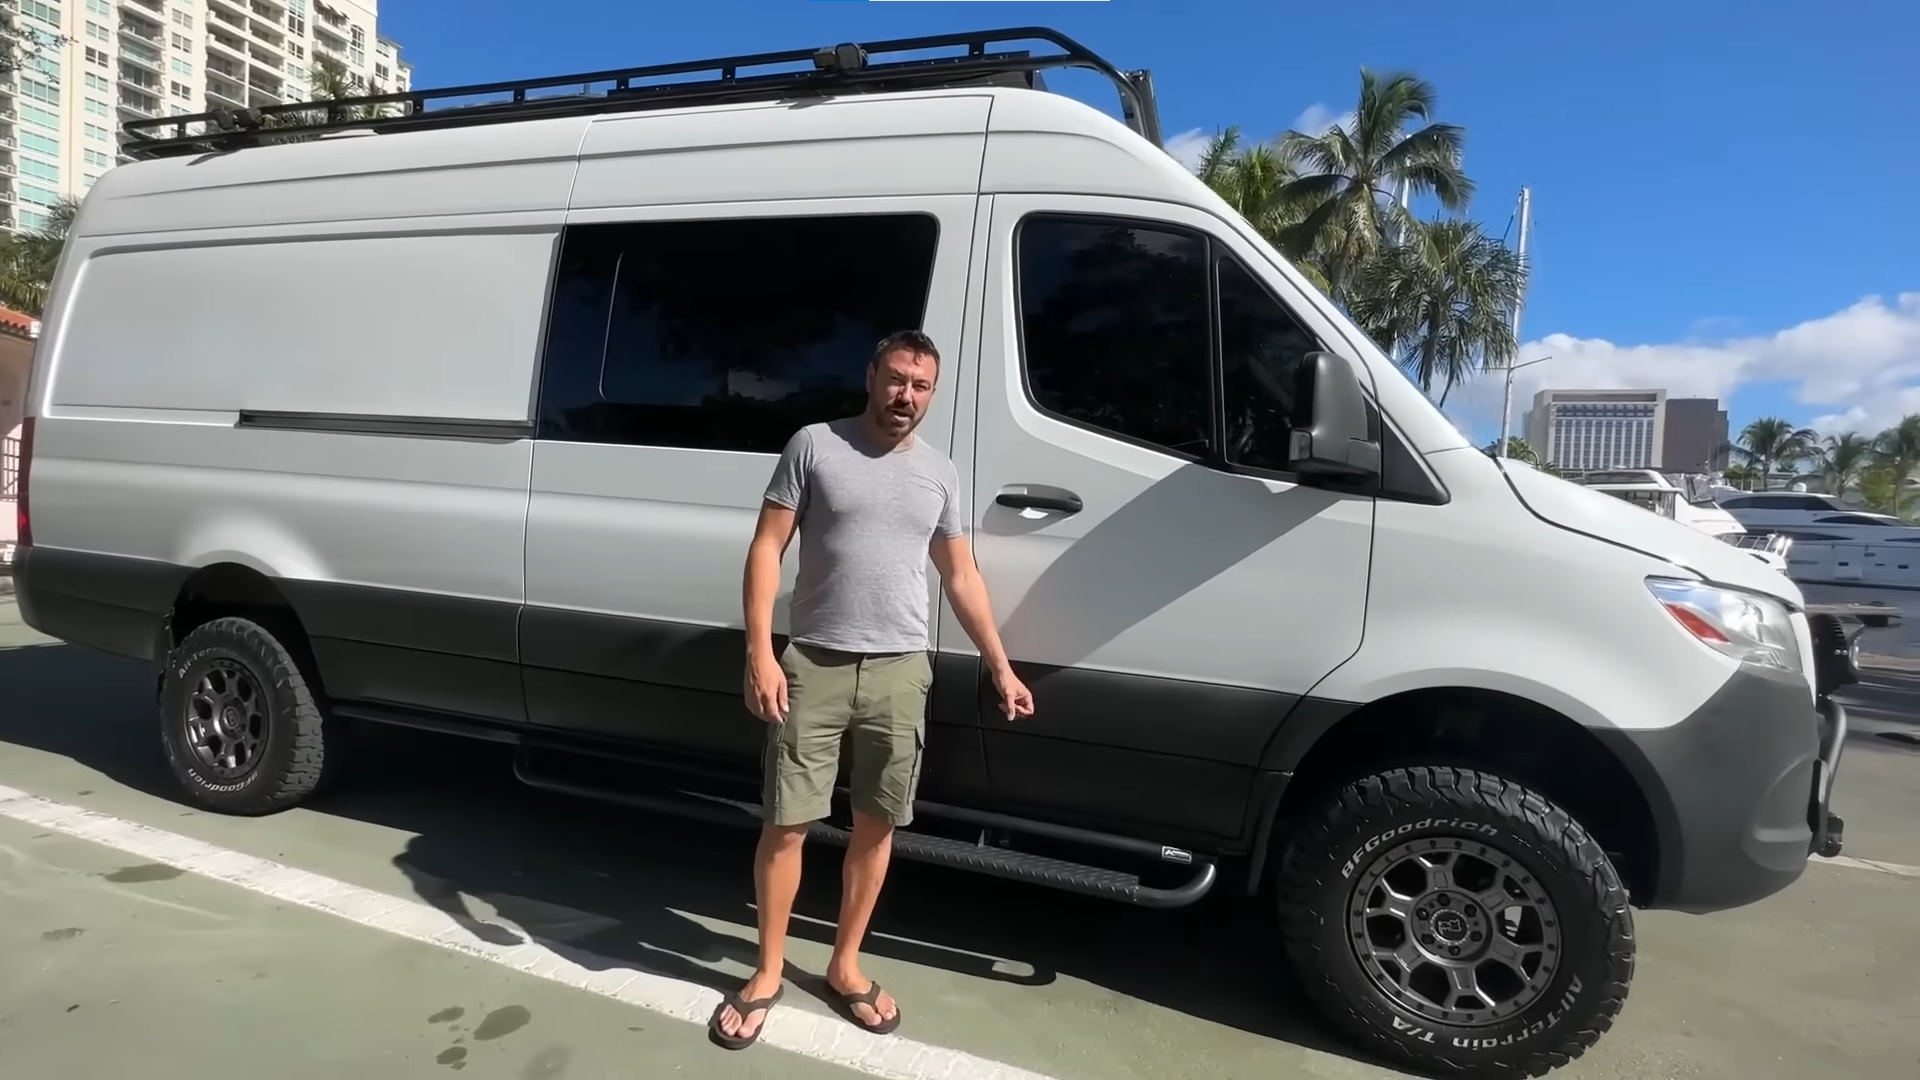 Mercedes Sprinter Camper Van Comes With Off-Road Upgrades and an Indoor ...